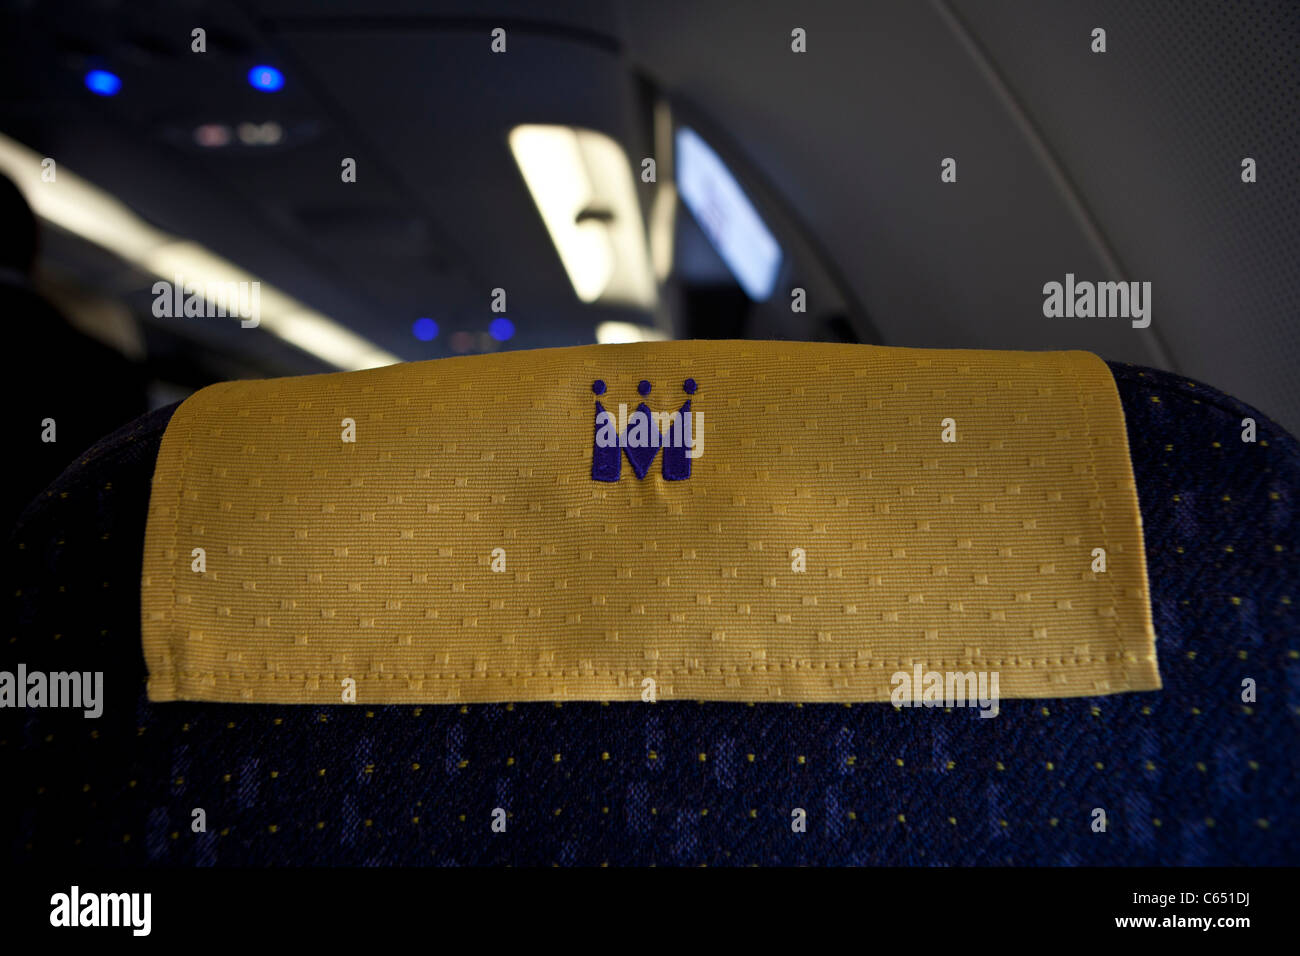 Monarch airline headrest Stock Photo